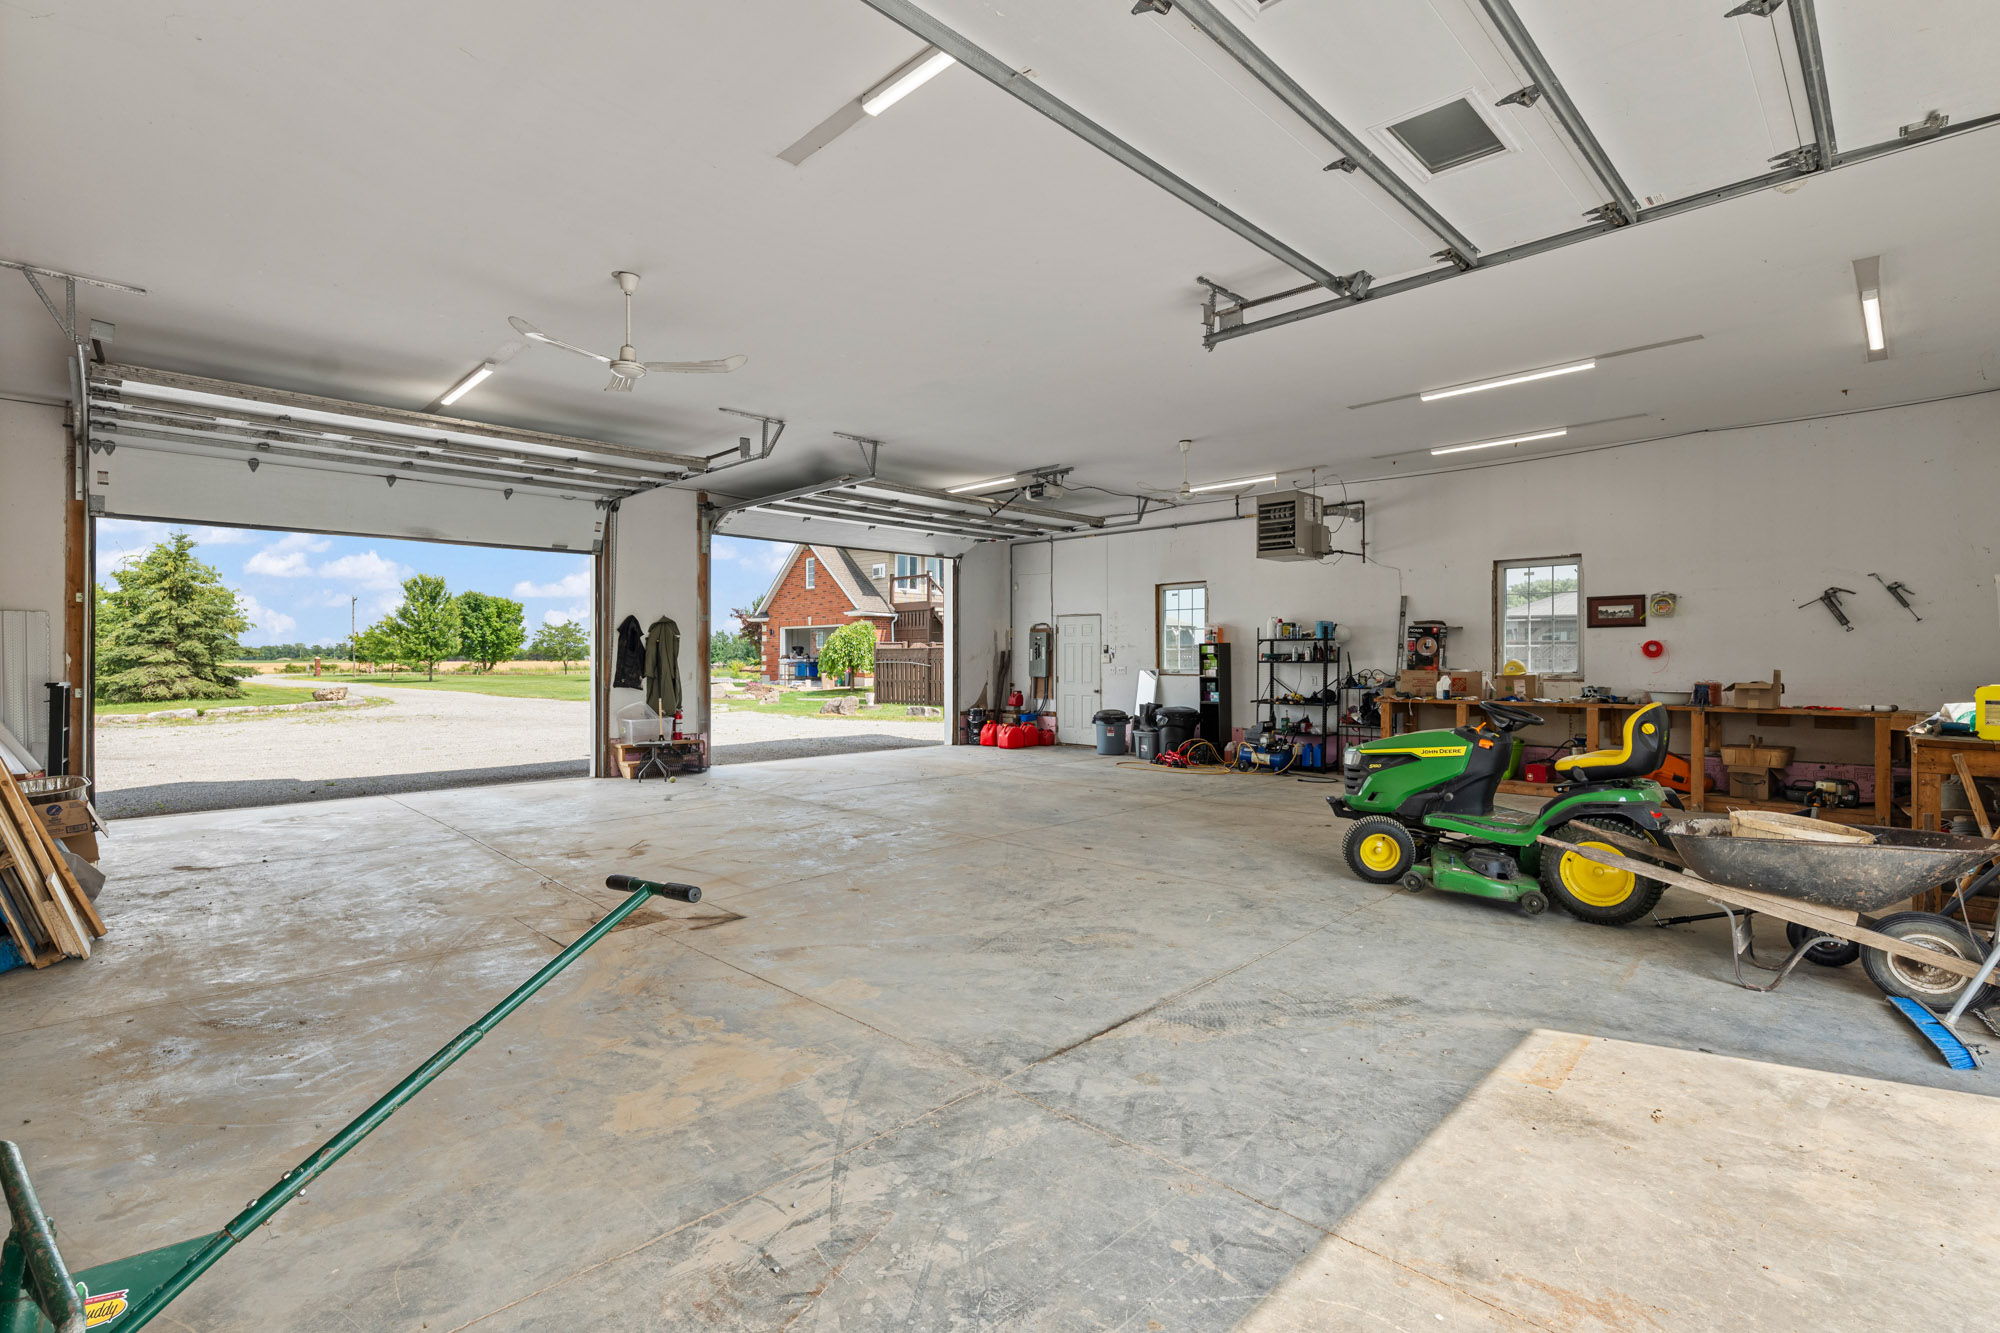 Interior 60 ft x 40 ft Detached Shop / Garage 11 ft ceiling height